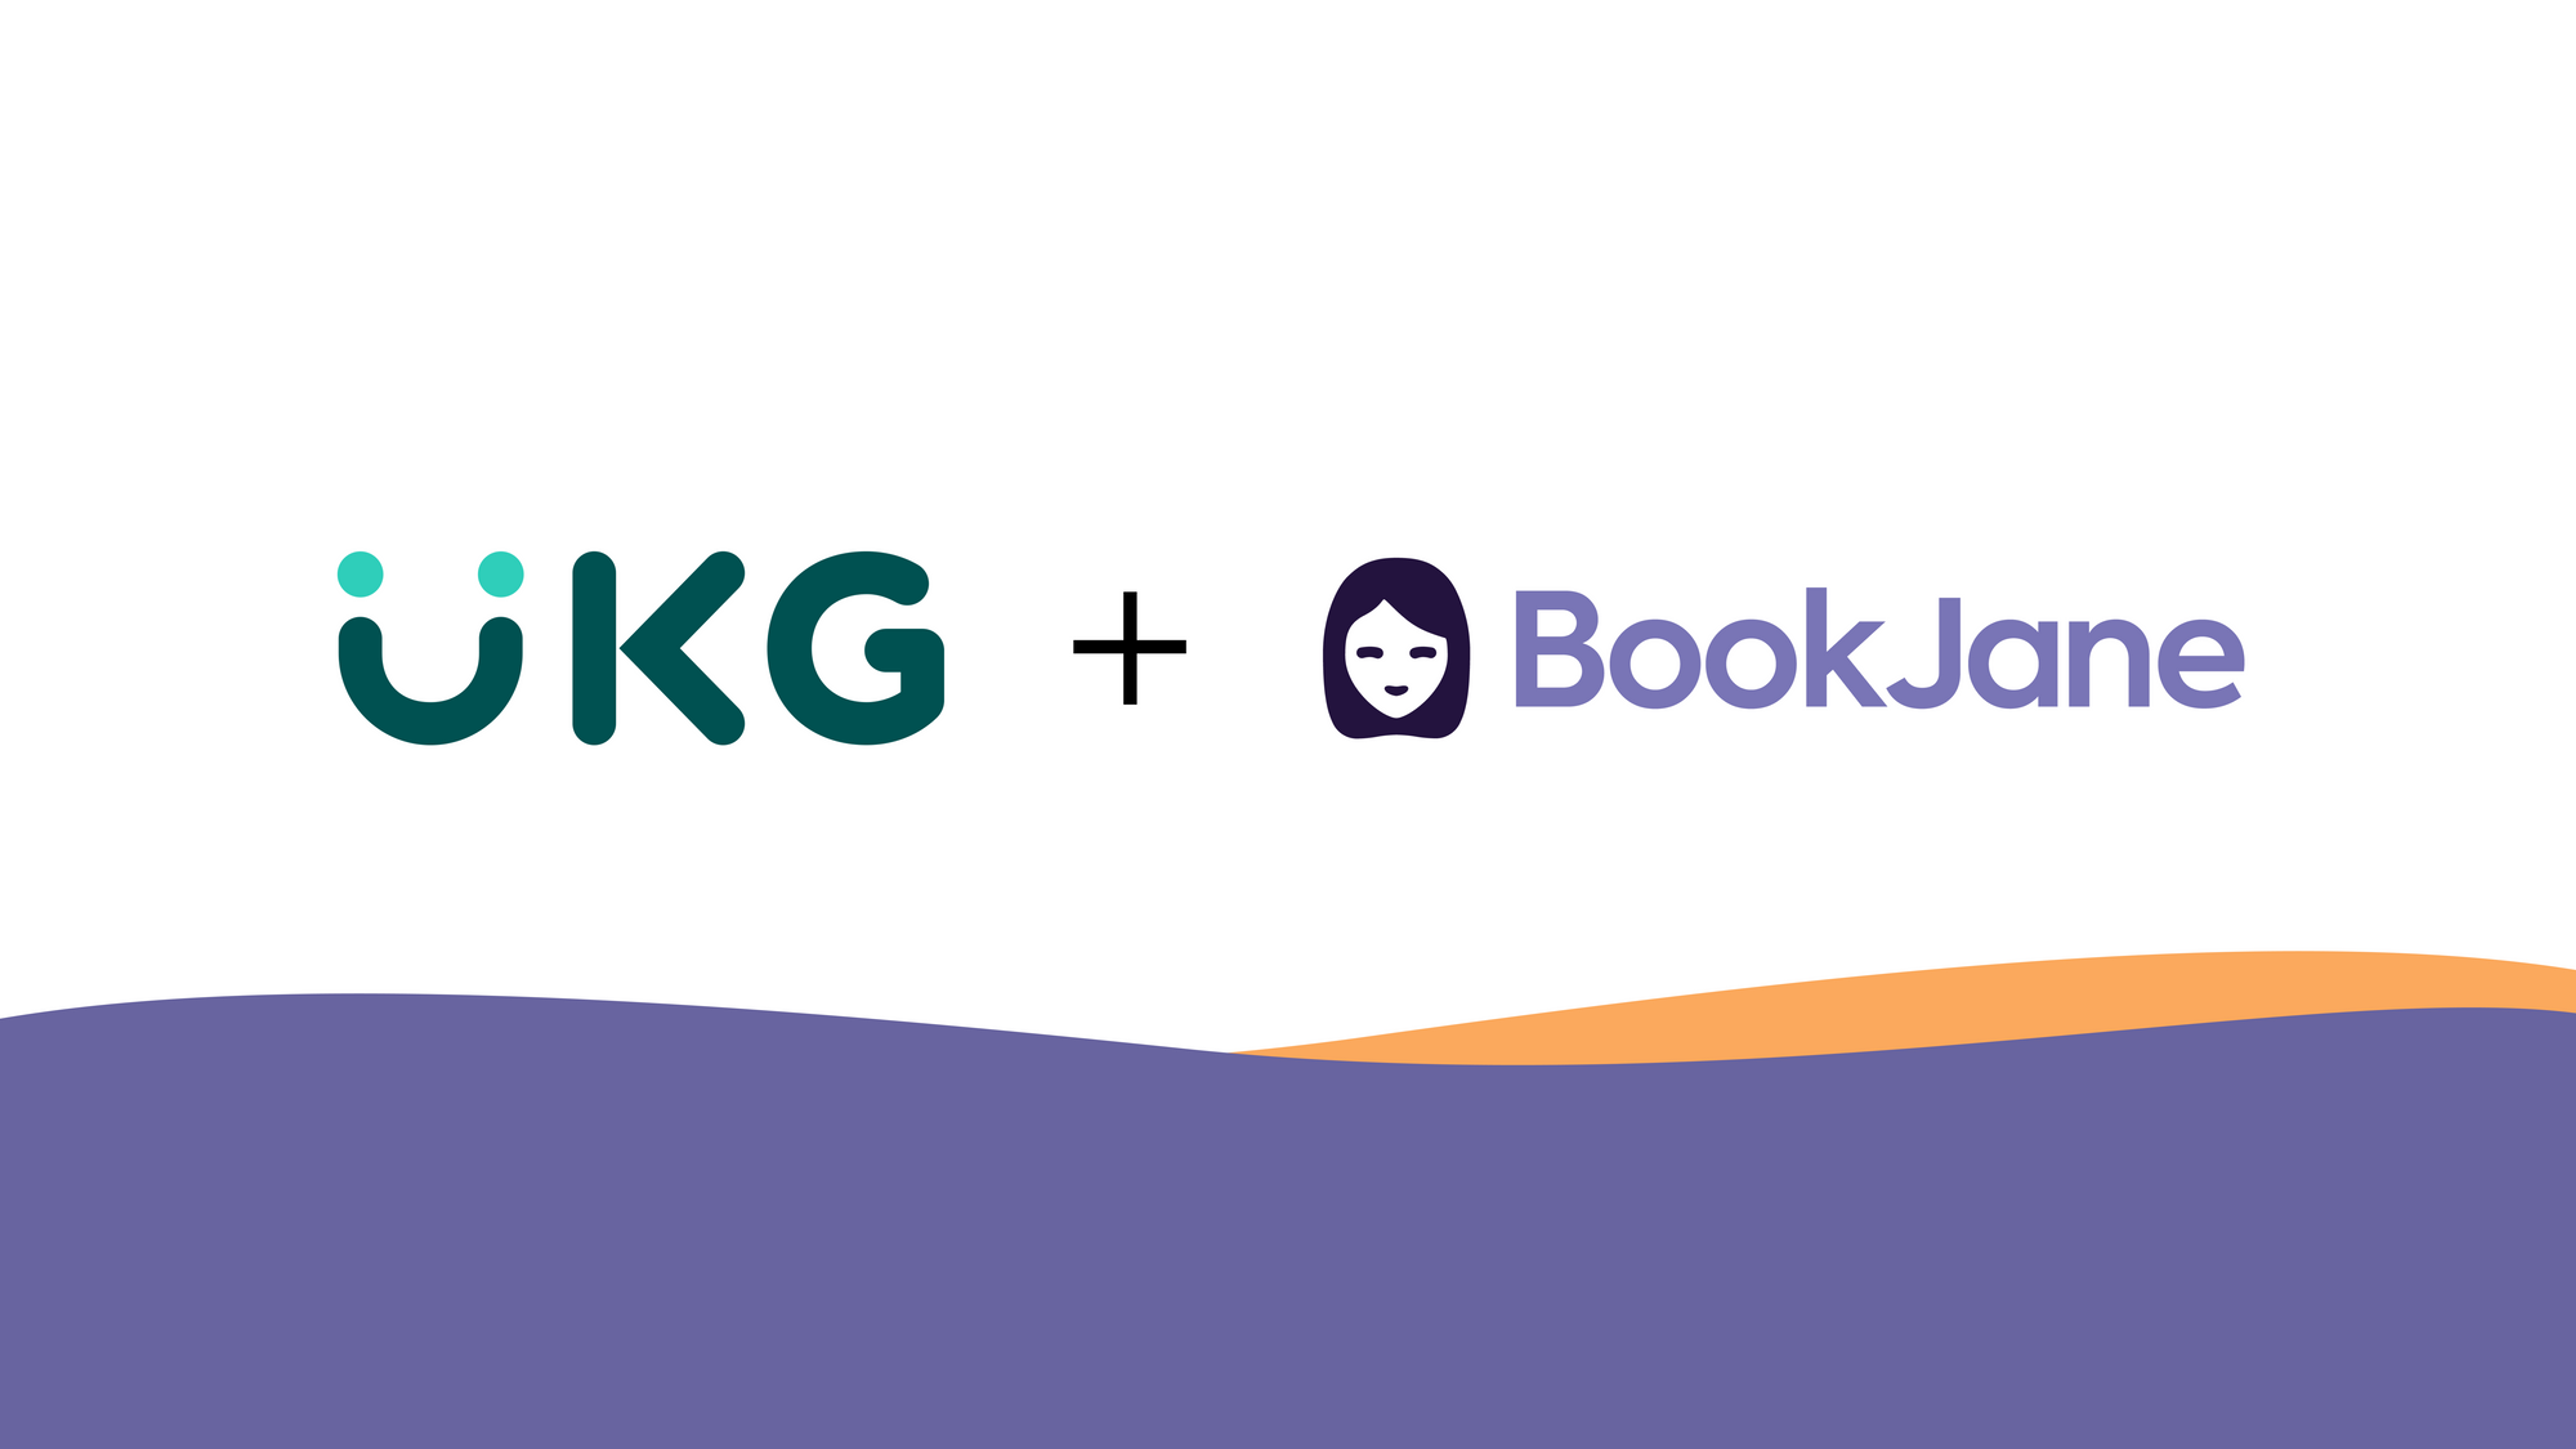 Image of BookJane and UKG Partnering through the UKG Connect Technology Partner Program